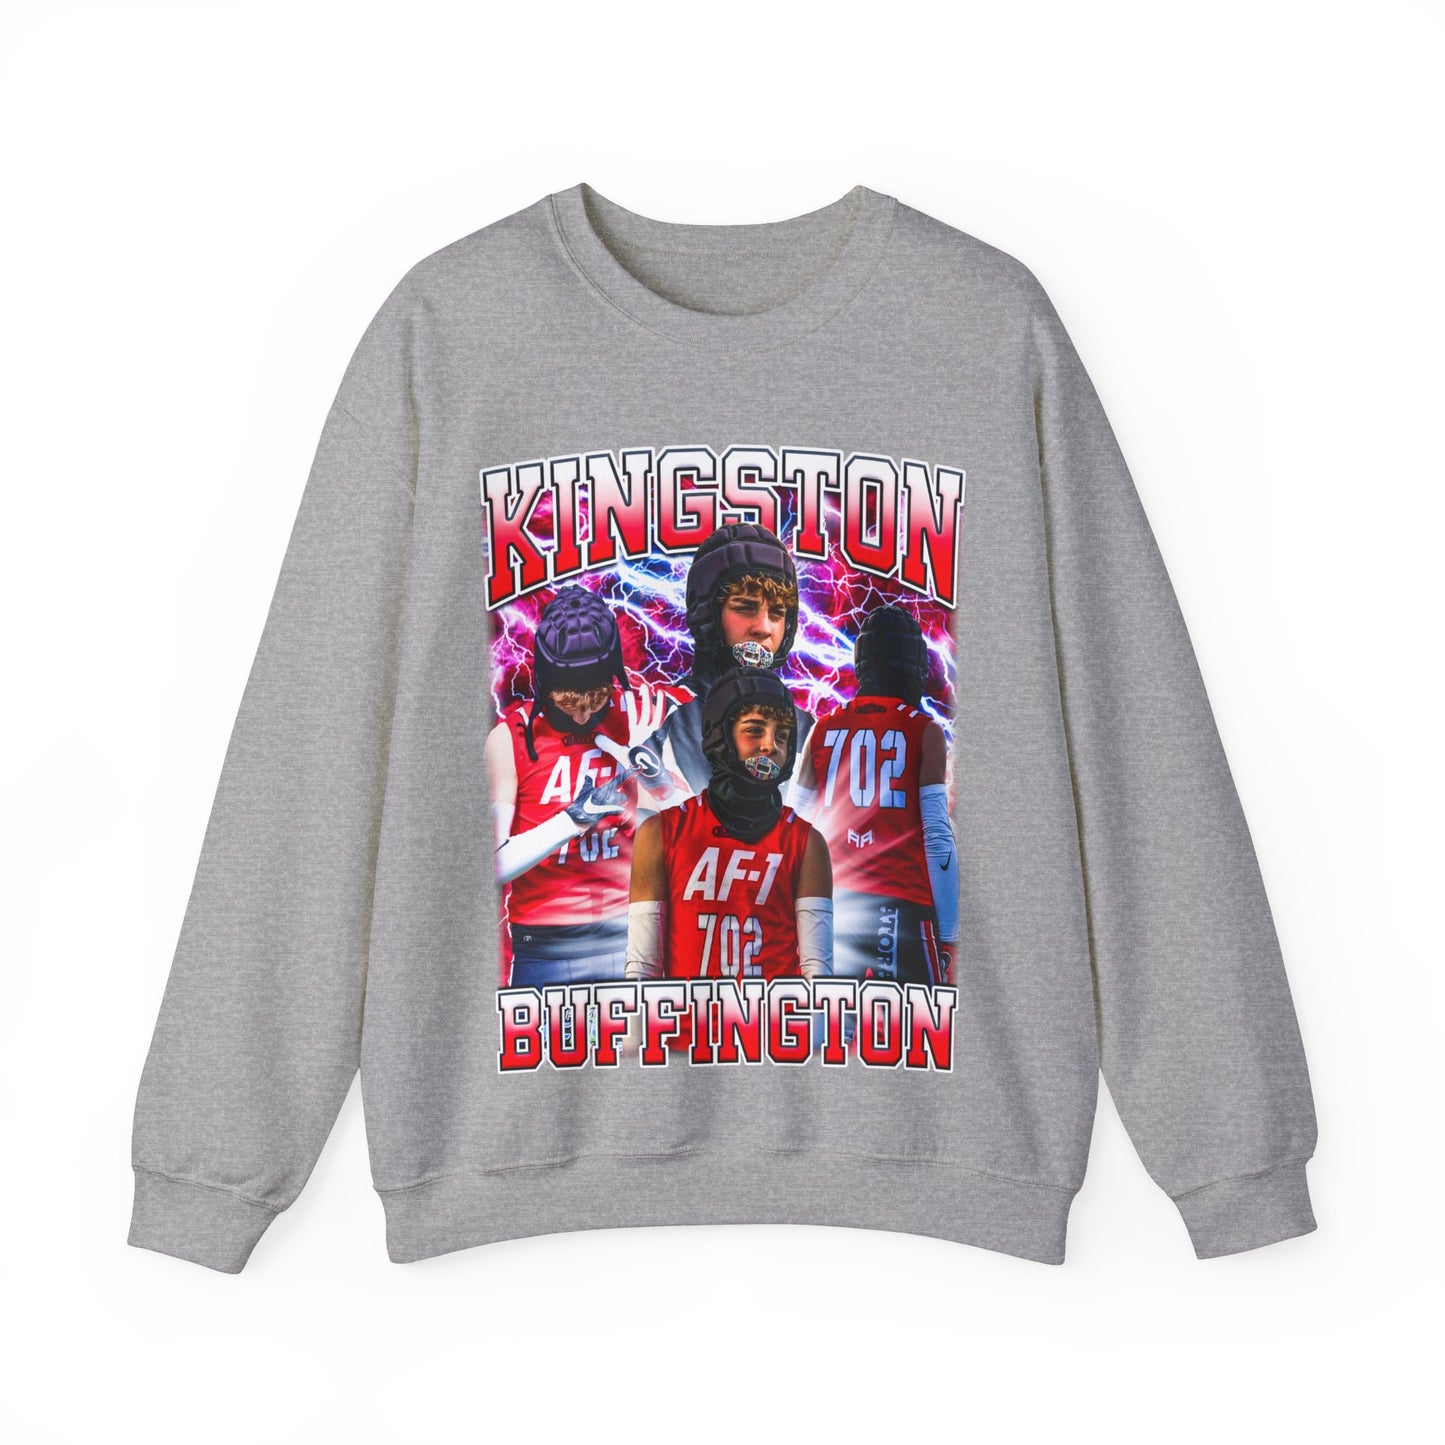 kingston Buffington Crewneck Sweatshirt